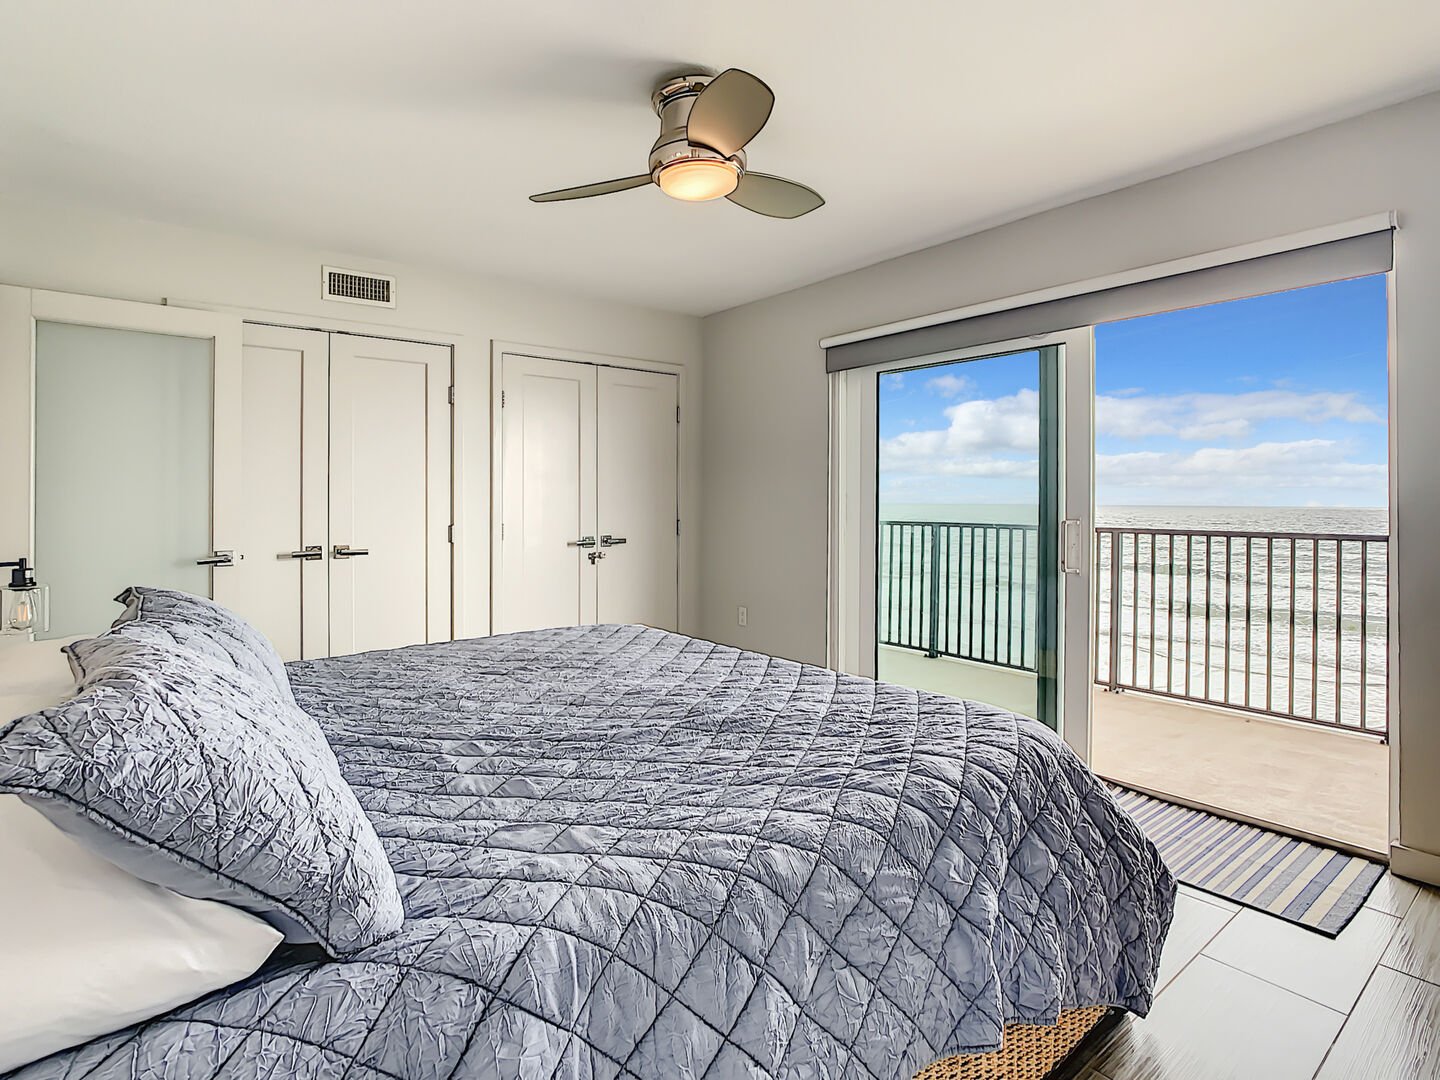 Master bedroom in our New Smyrna Beach FL Rental